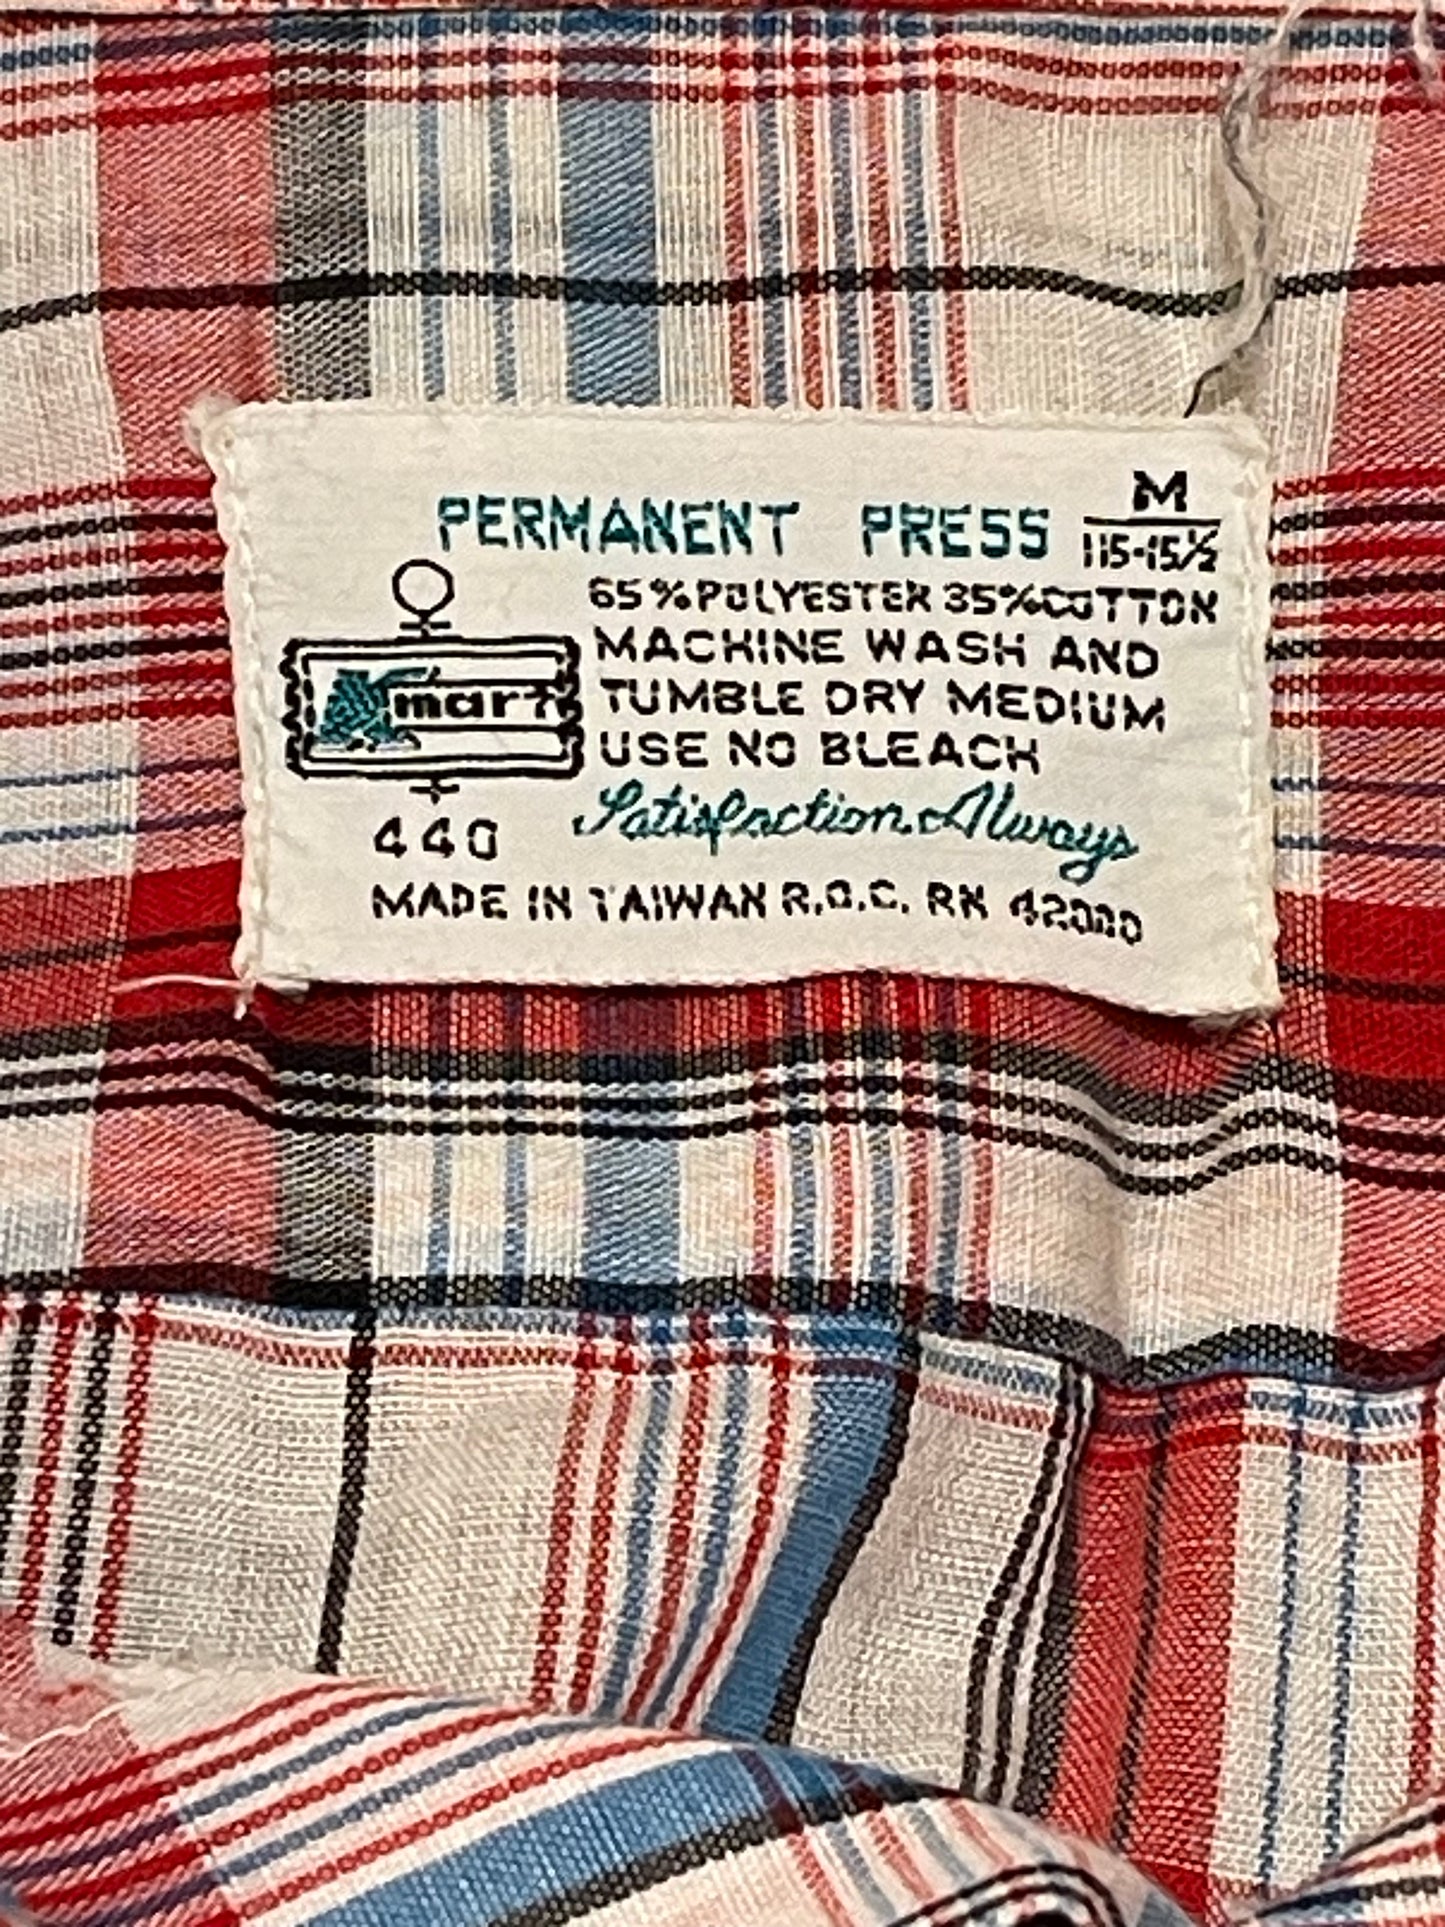 Kmart Permanent Press Patriotic Plaid Shirt